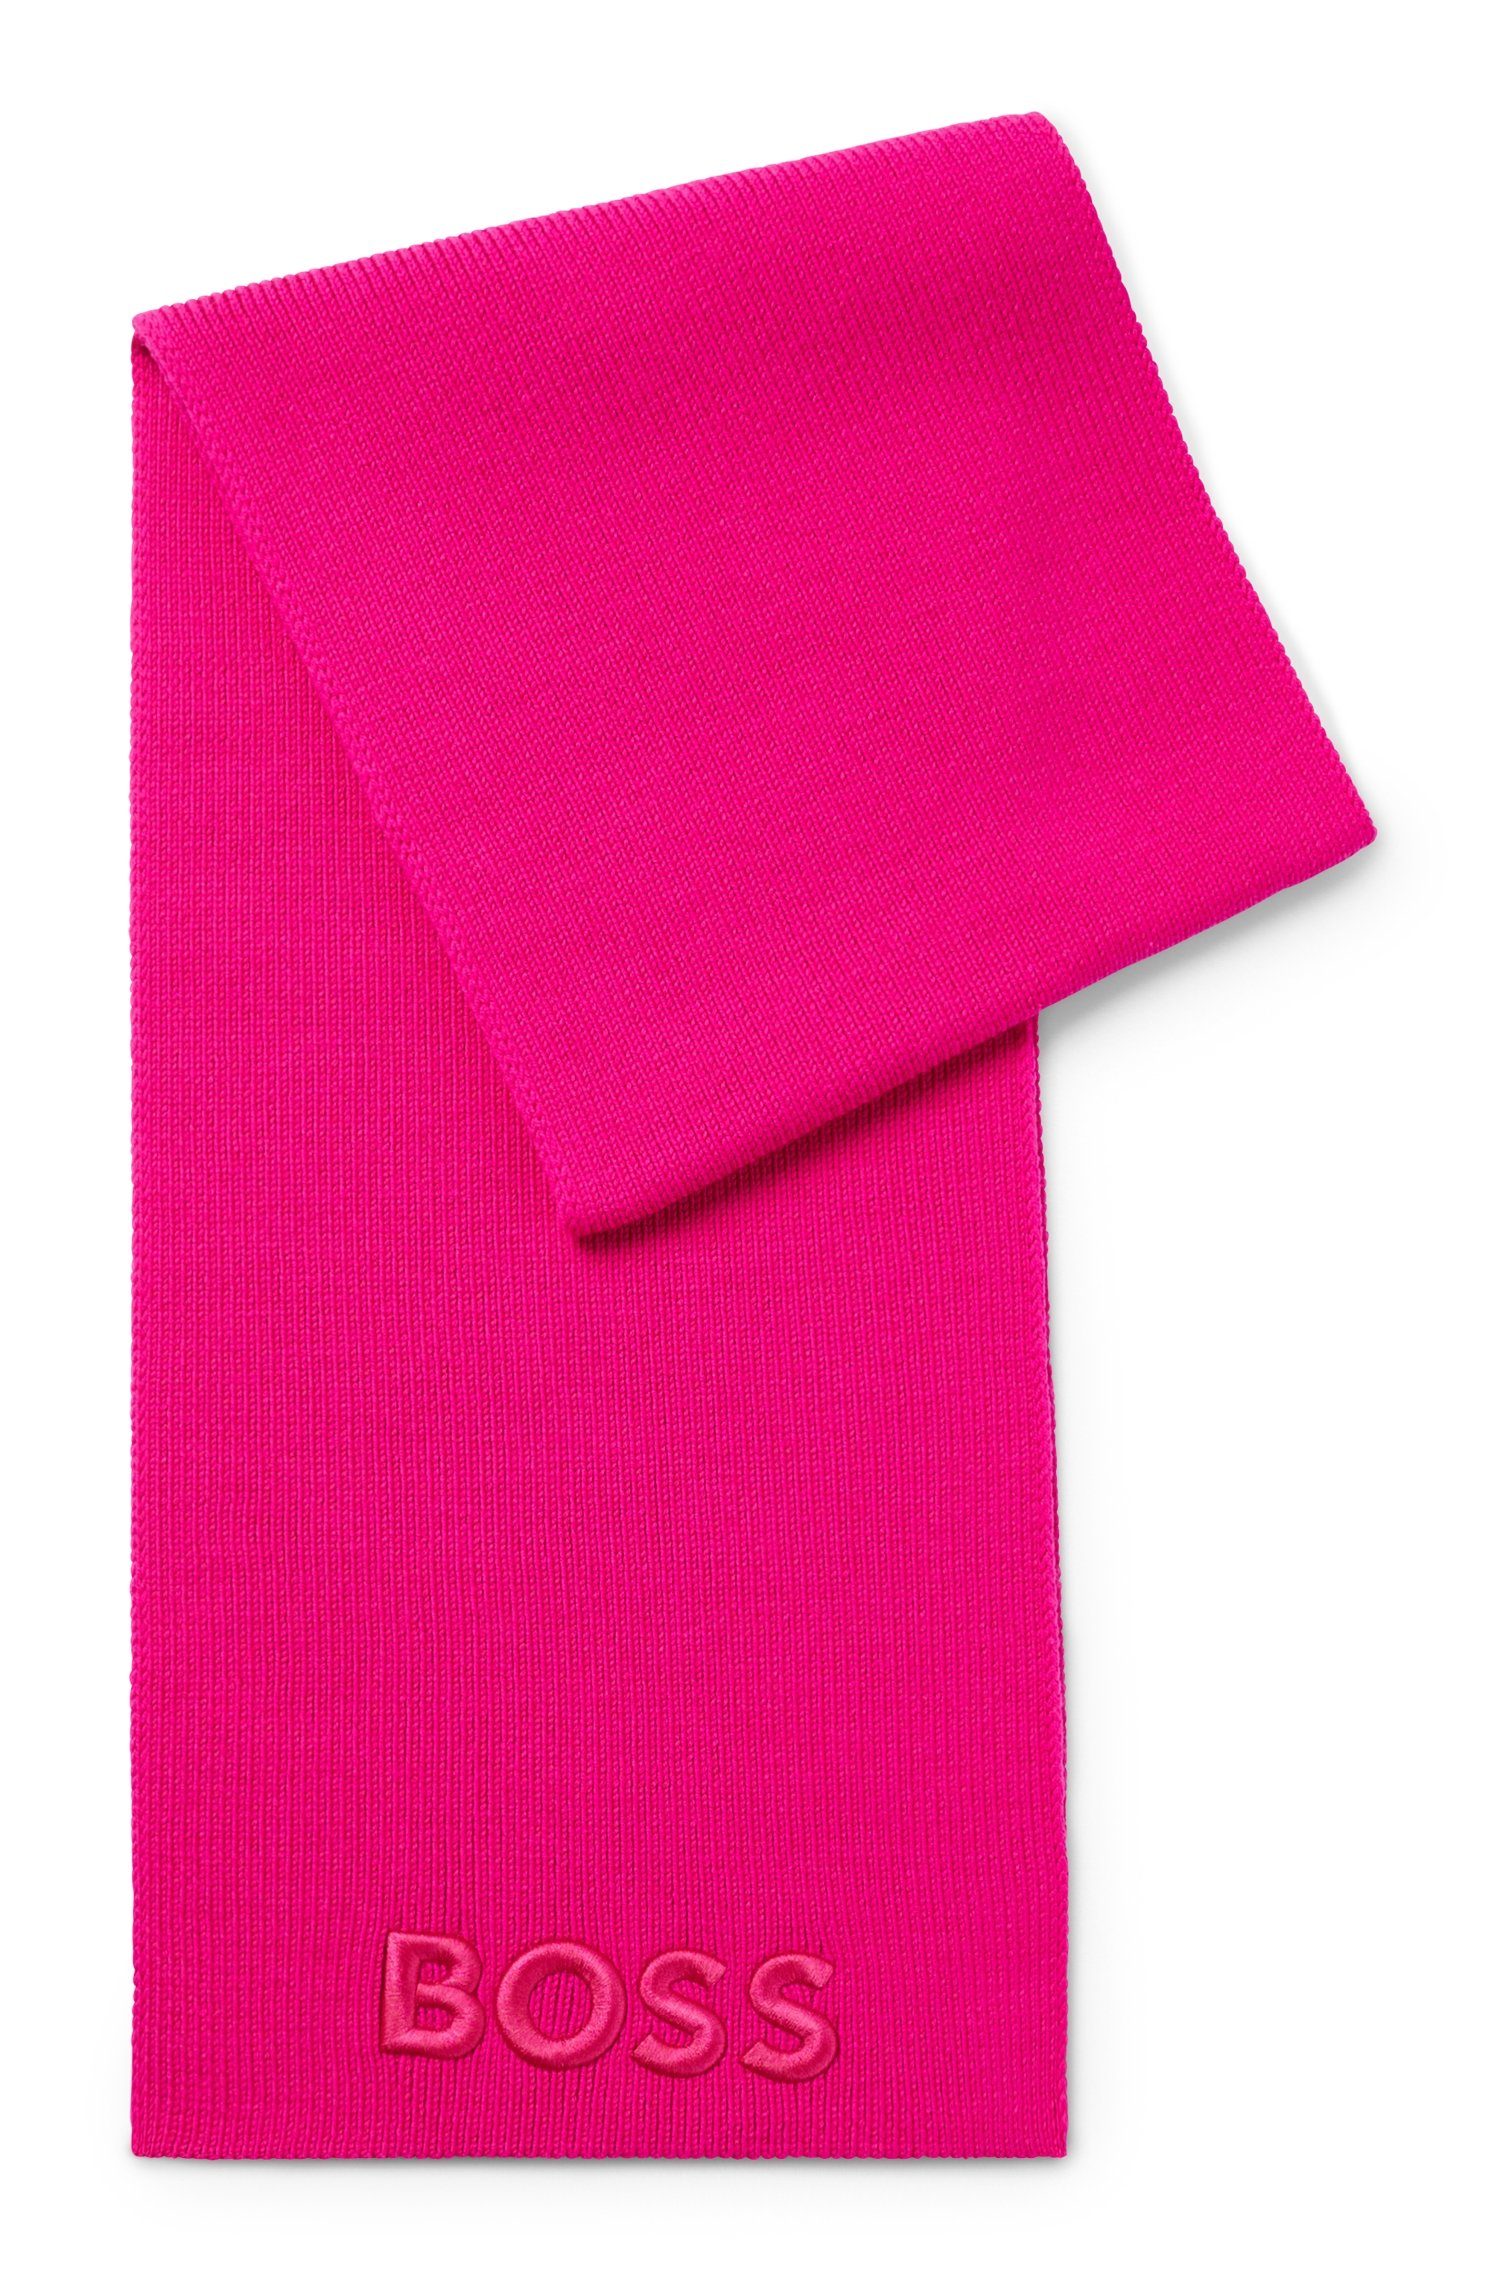 BOSS Logo-Stickerei Schal mit Bright_Pink Lara_scarf, BOSS tonaler